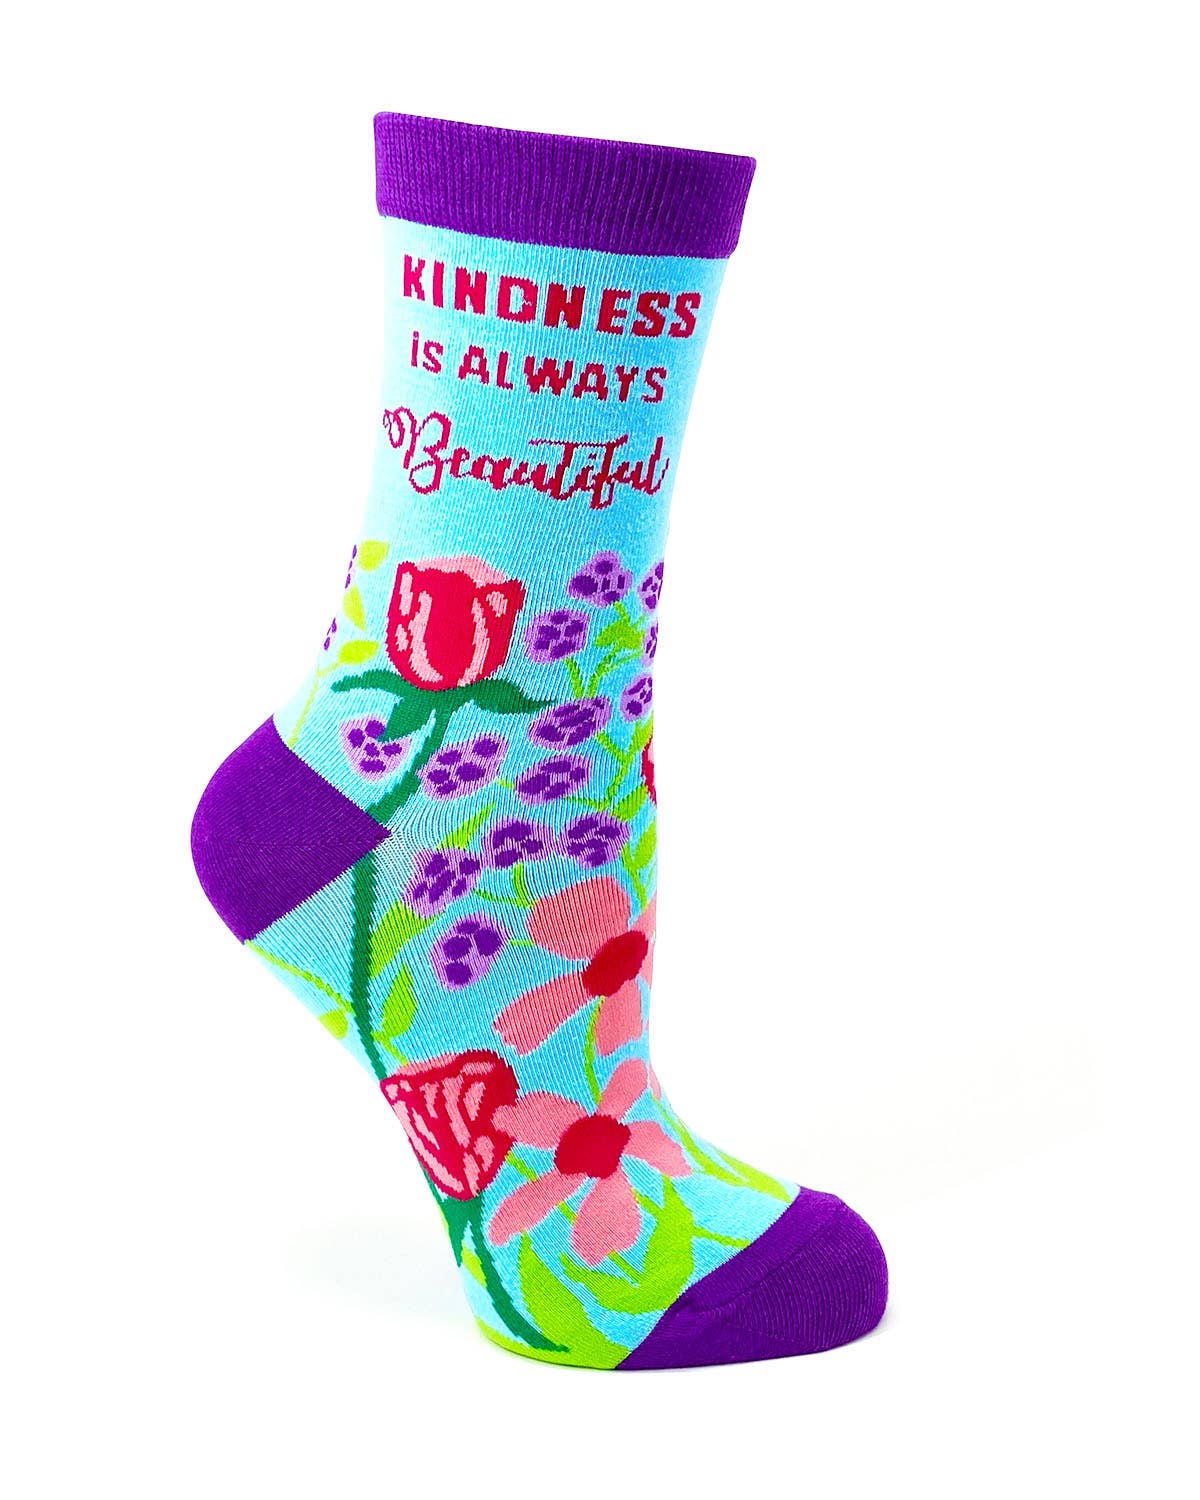 Kindness is Always Beautiful Women's Novelty Crew Socks